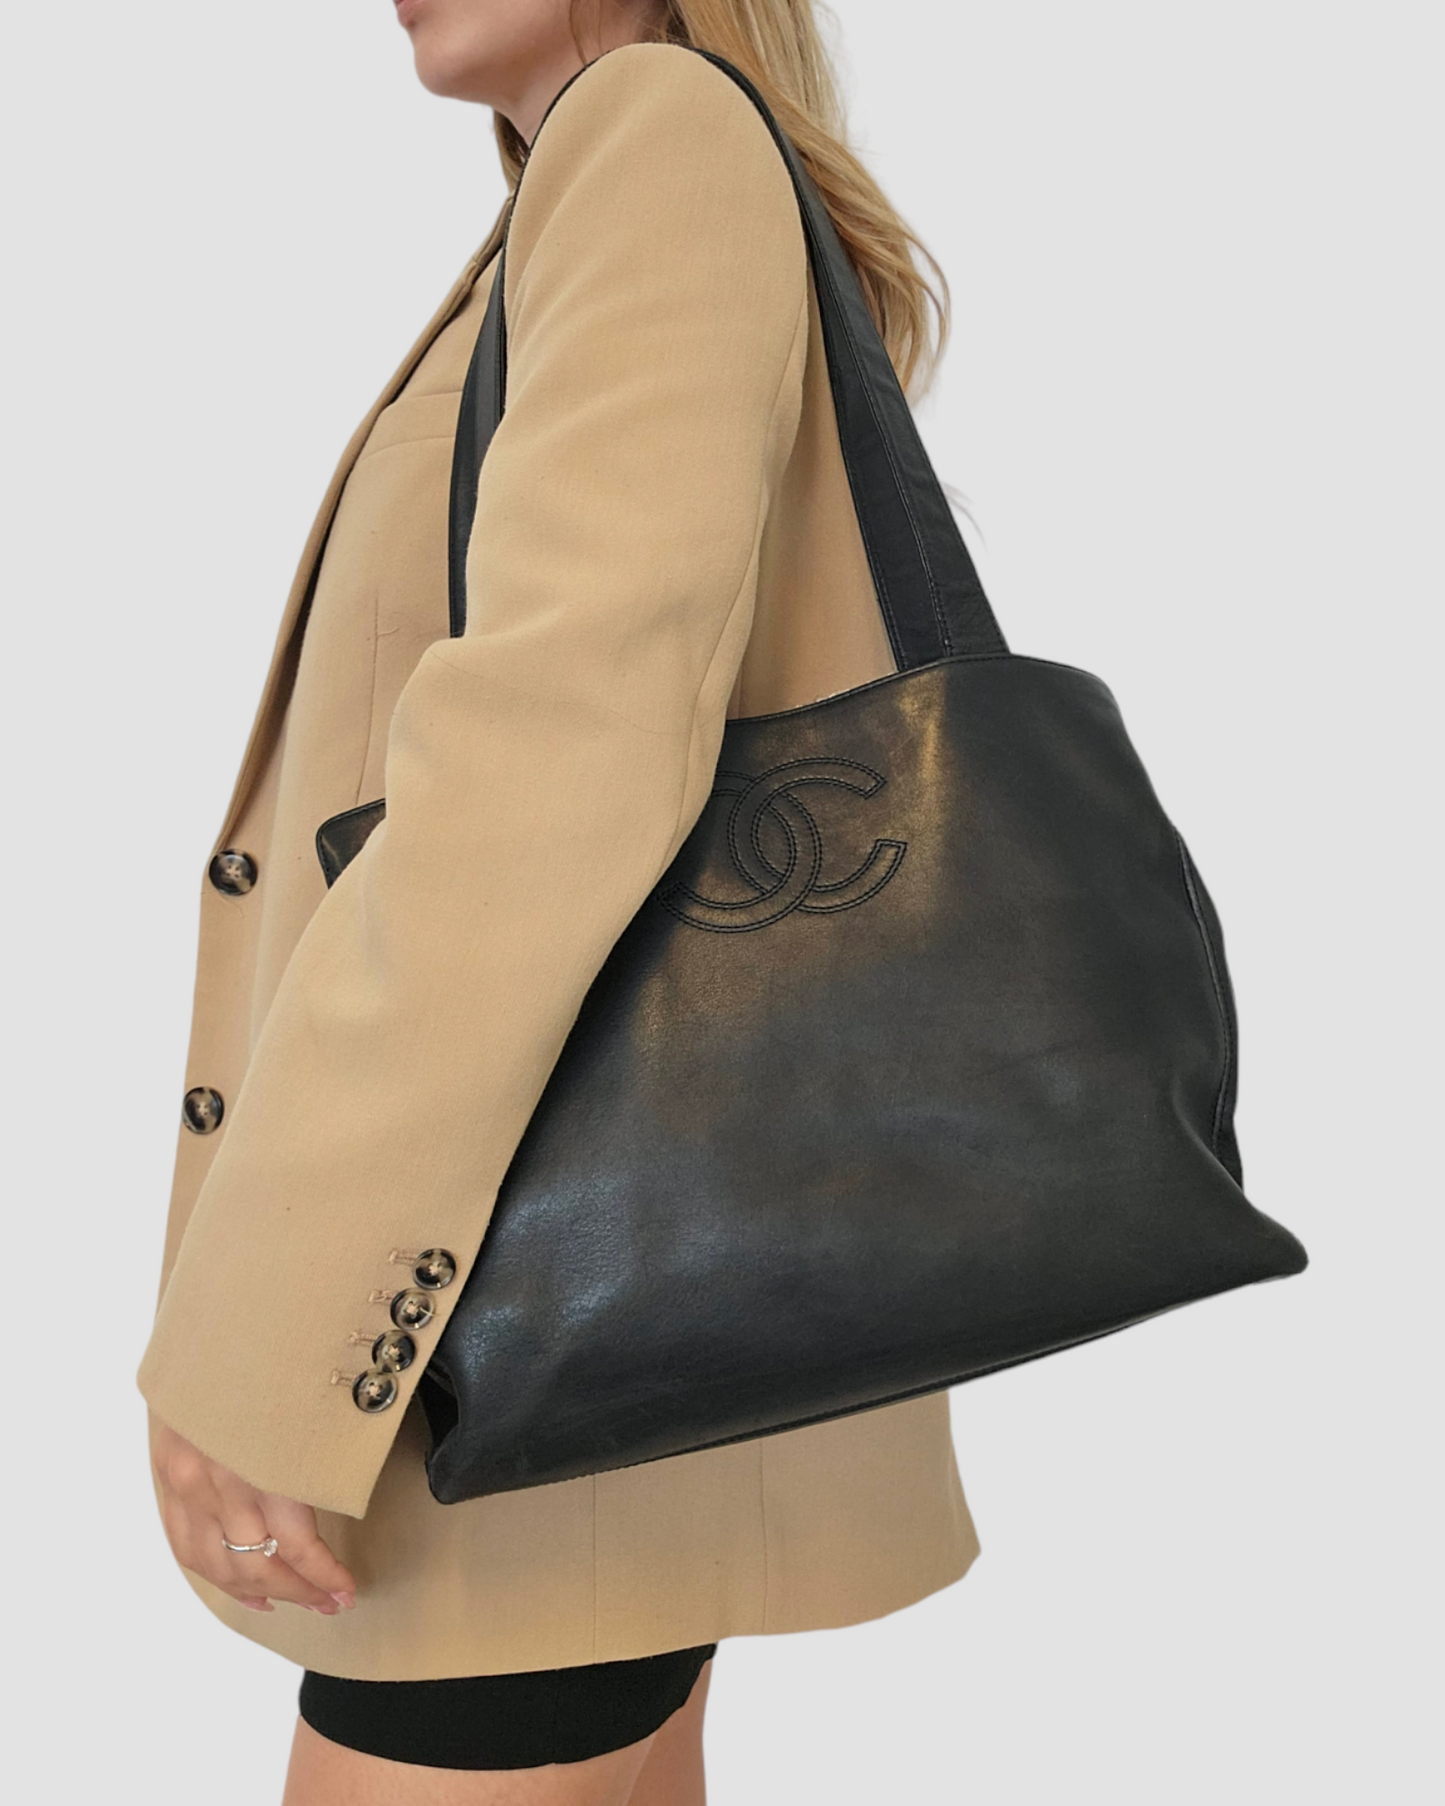 Chanel black Leather Handbag